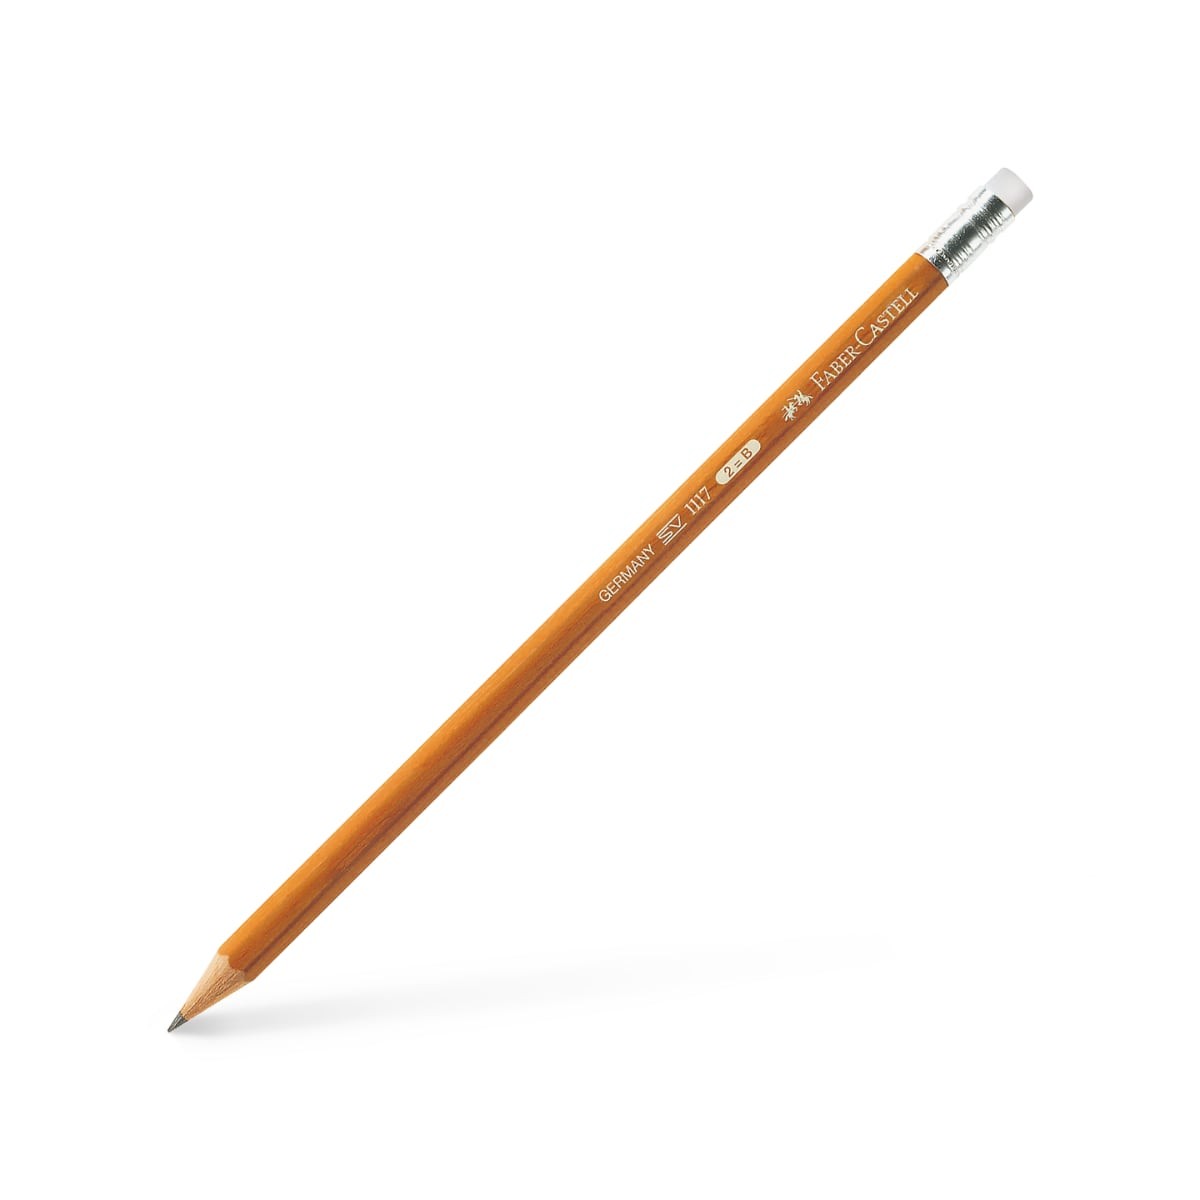 Faber-Castell 1117 Μολύβι με γόμα Πορτοκαλί 2=B